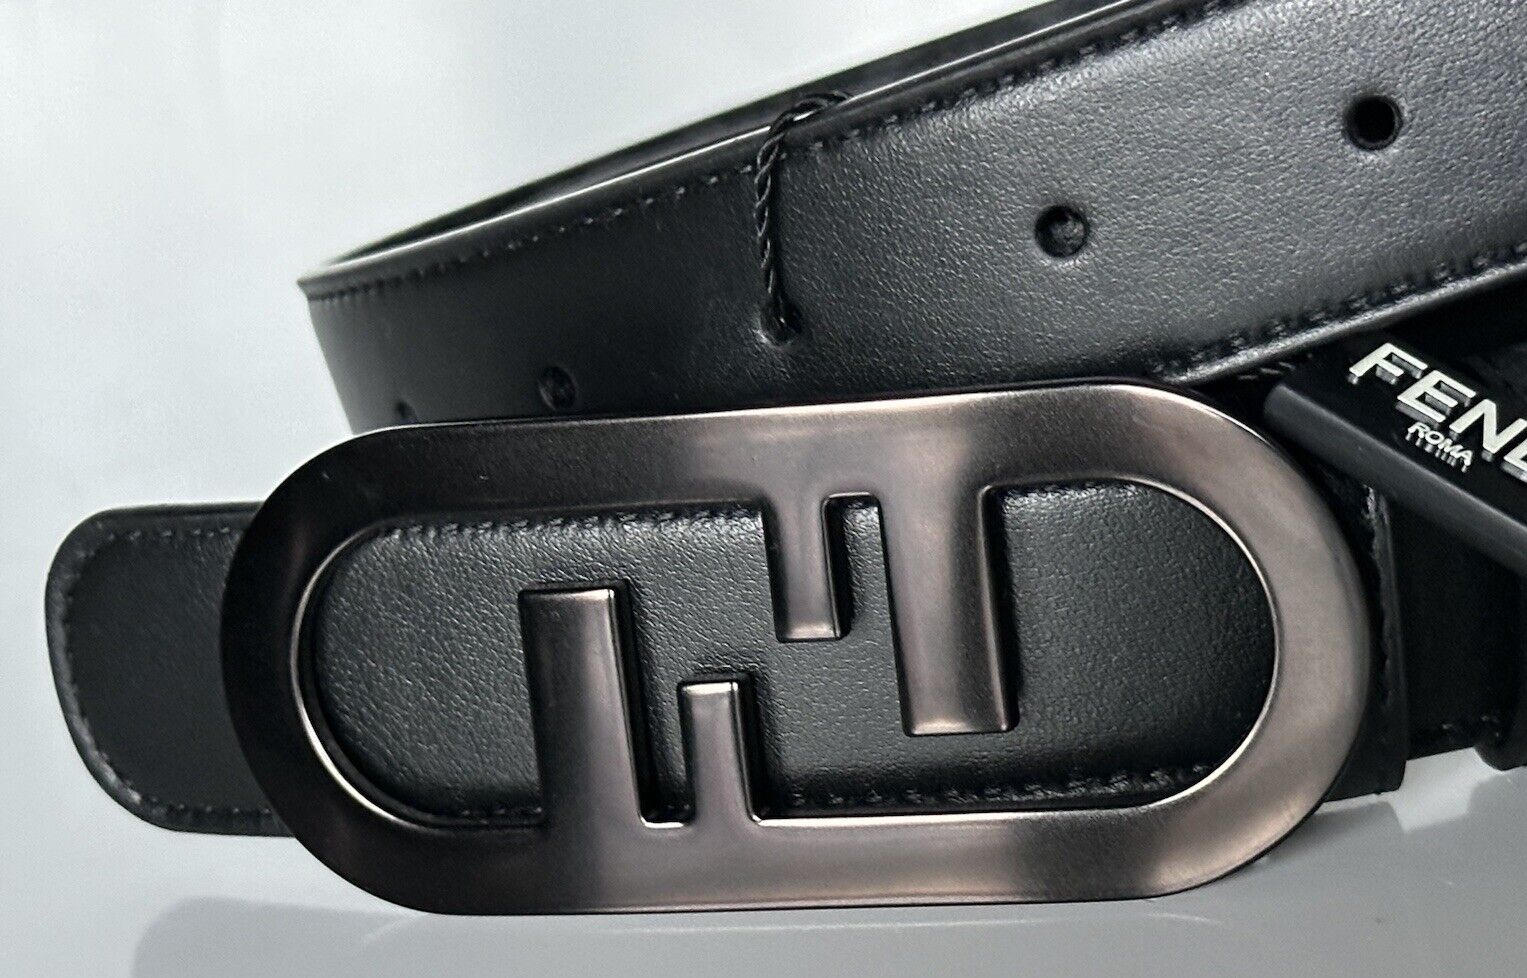 Fendi FF O’lock Leather Reversible Black/Grey Belt 100/40 Italy 7C0475 NWT $630